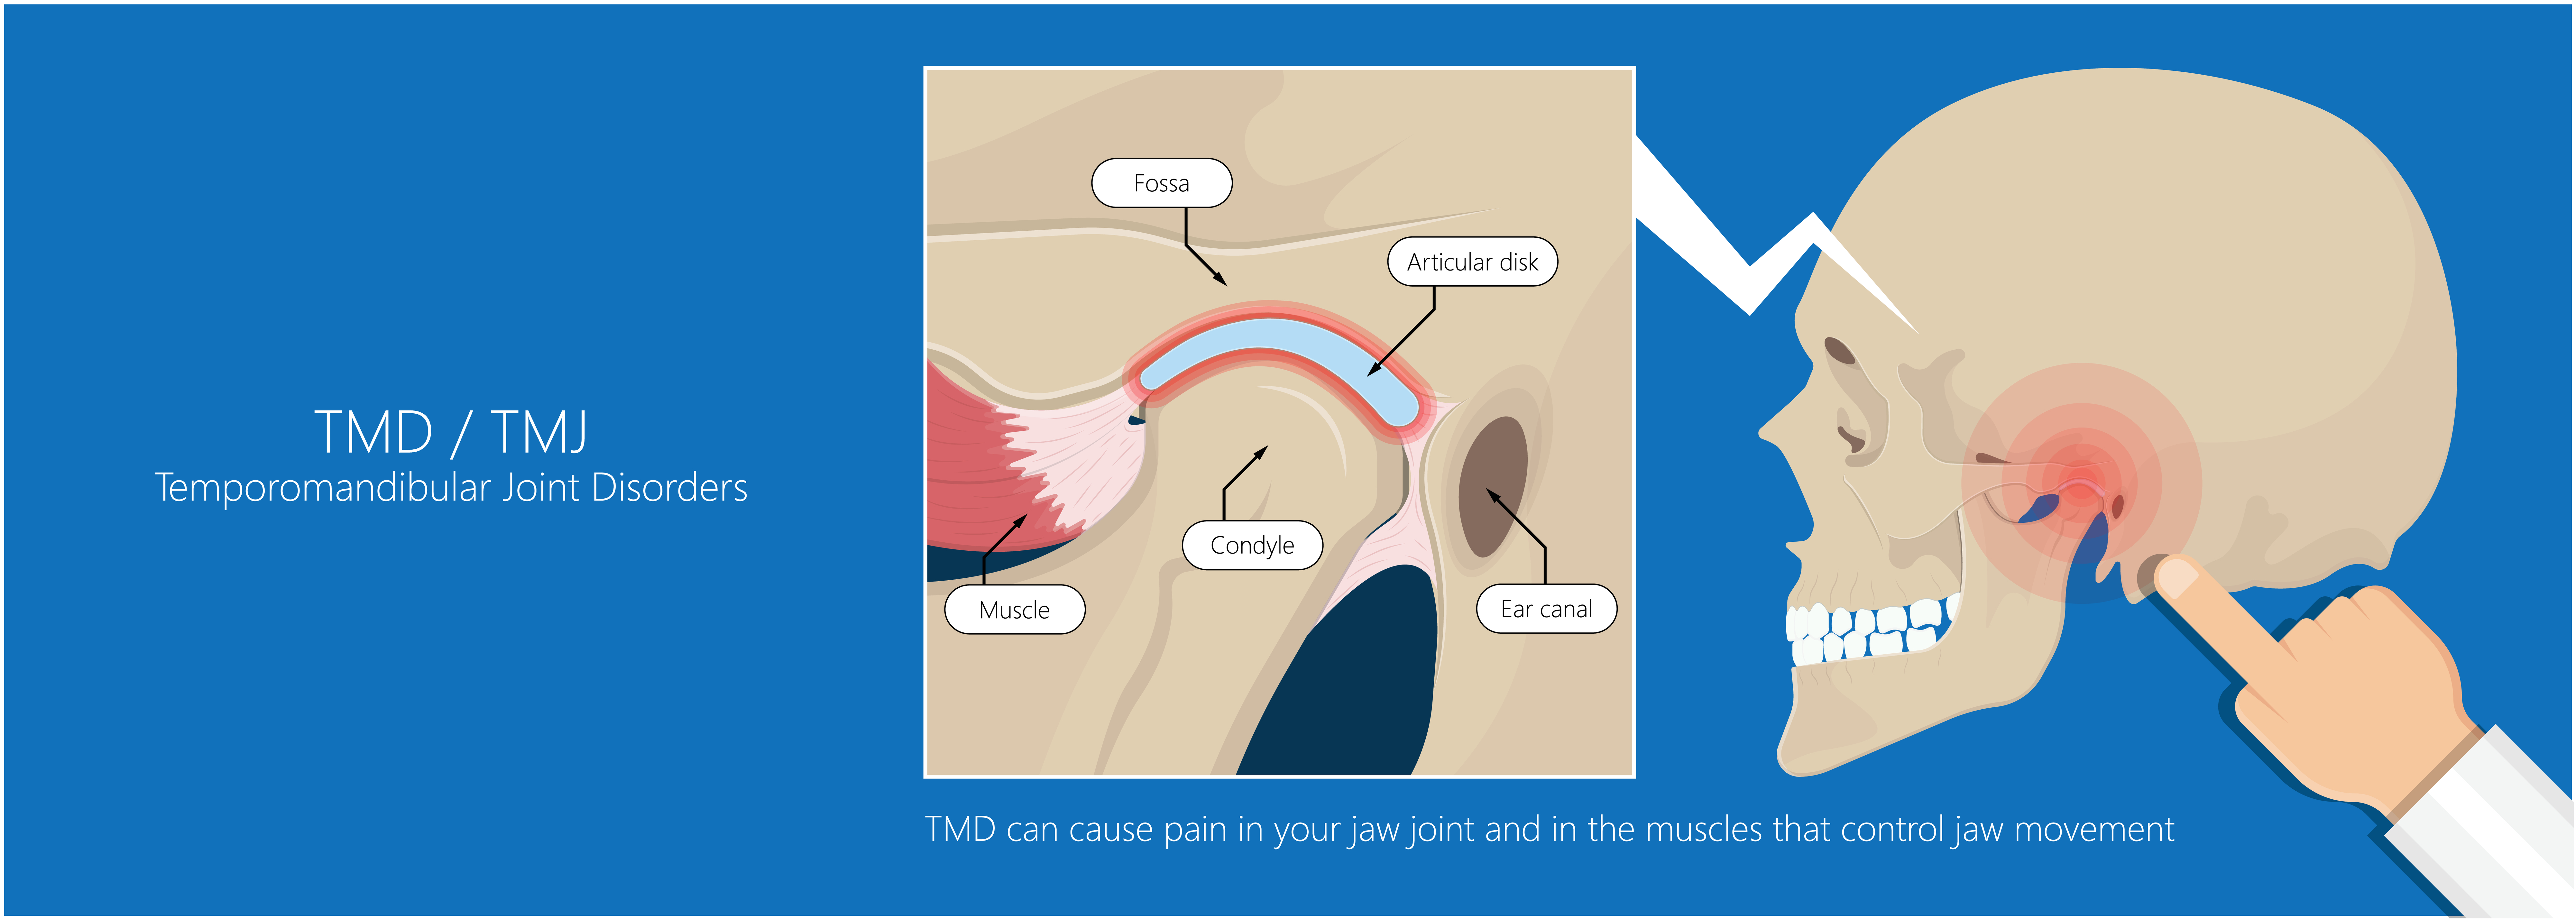 Temporomandibular joint disorder